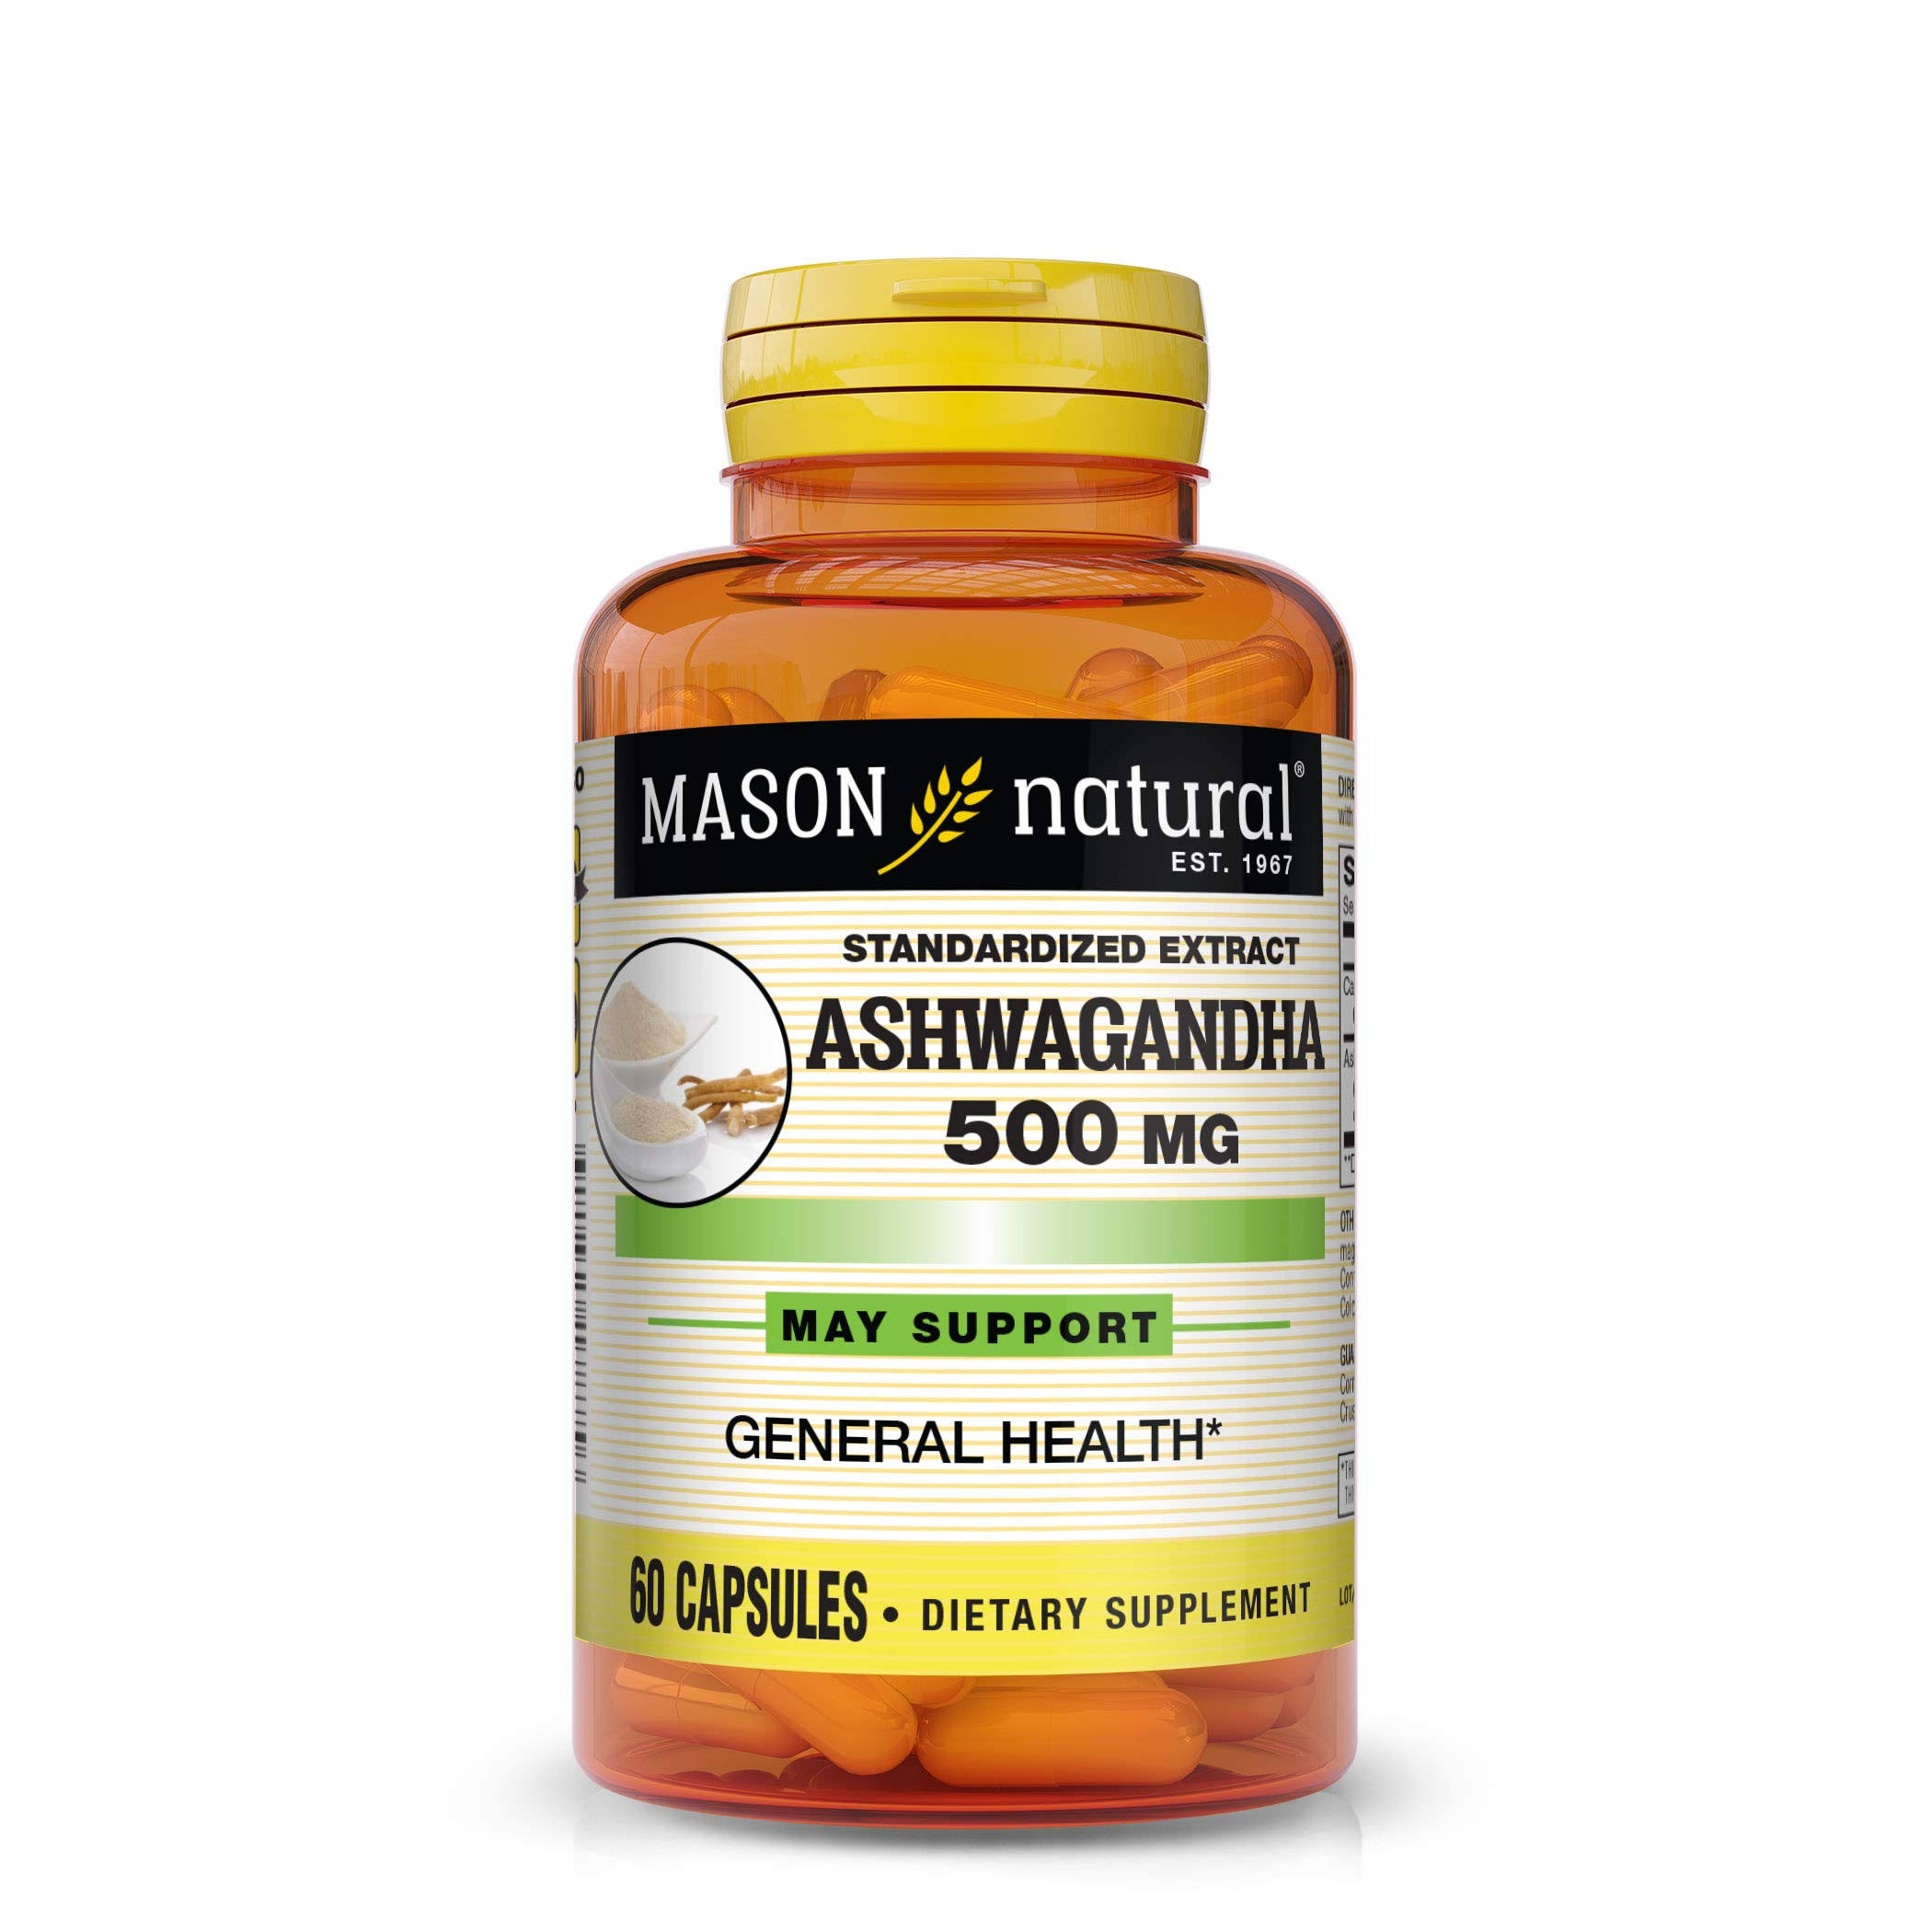 Mason Natural, Standardized Extract Ashwagandha, 500 mg, 60 Capsules